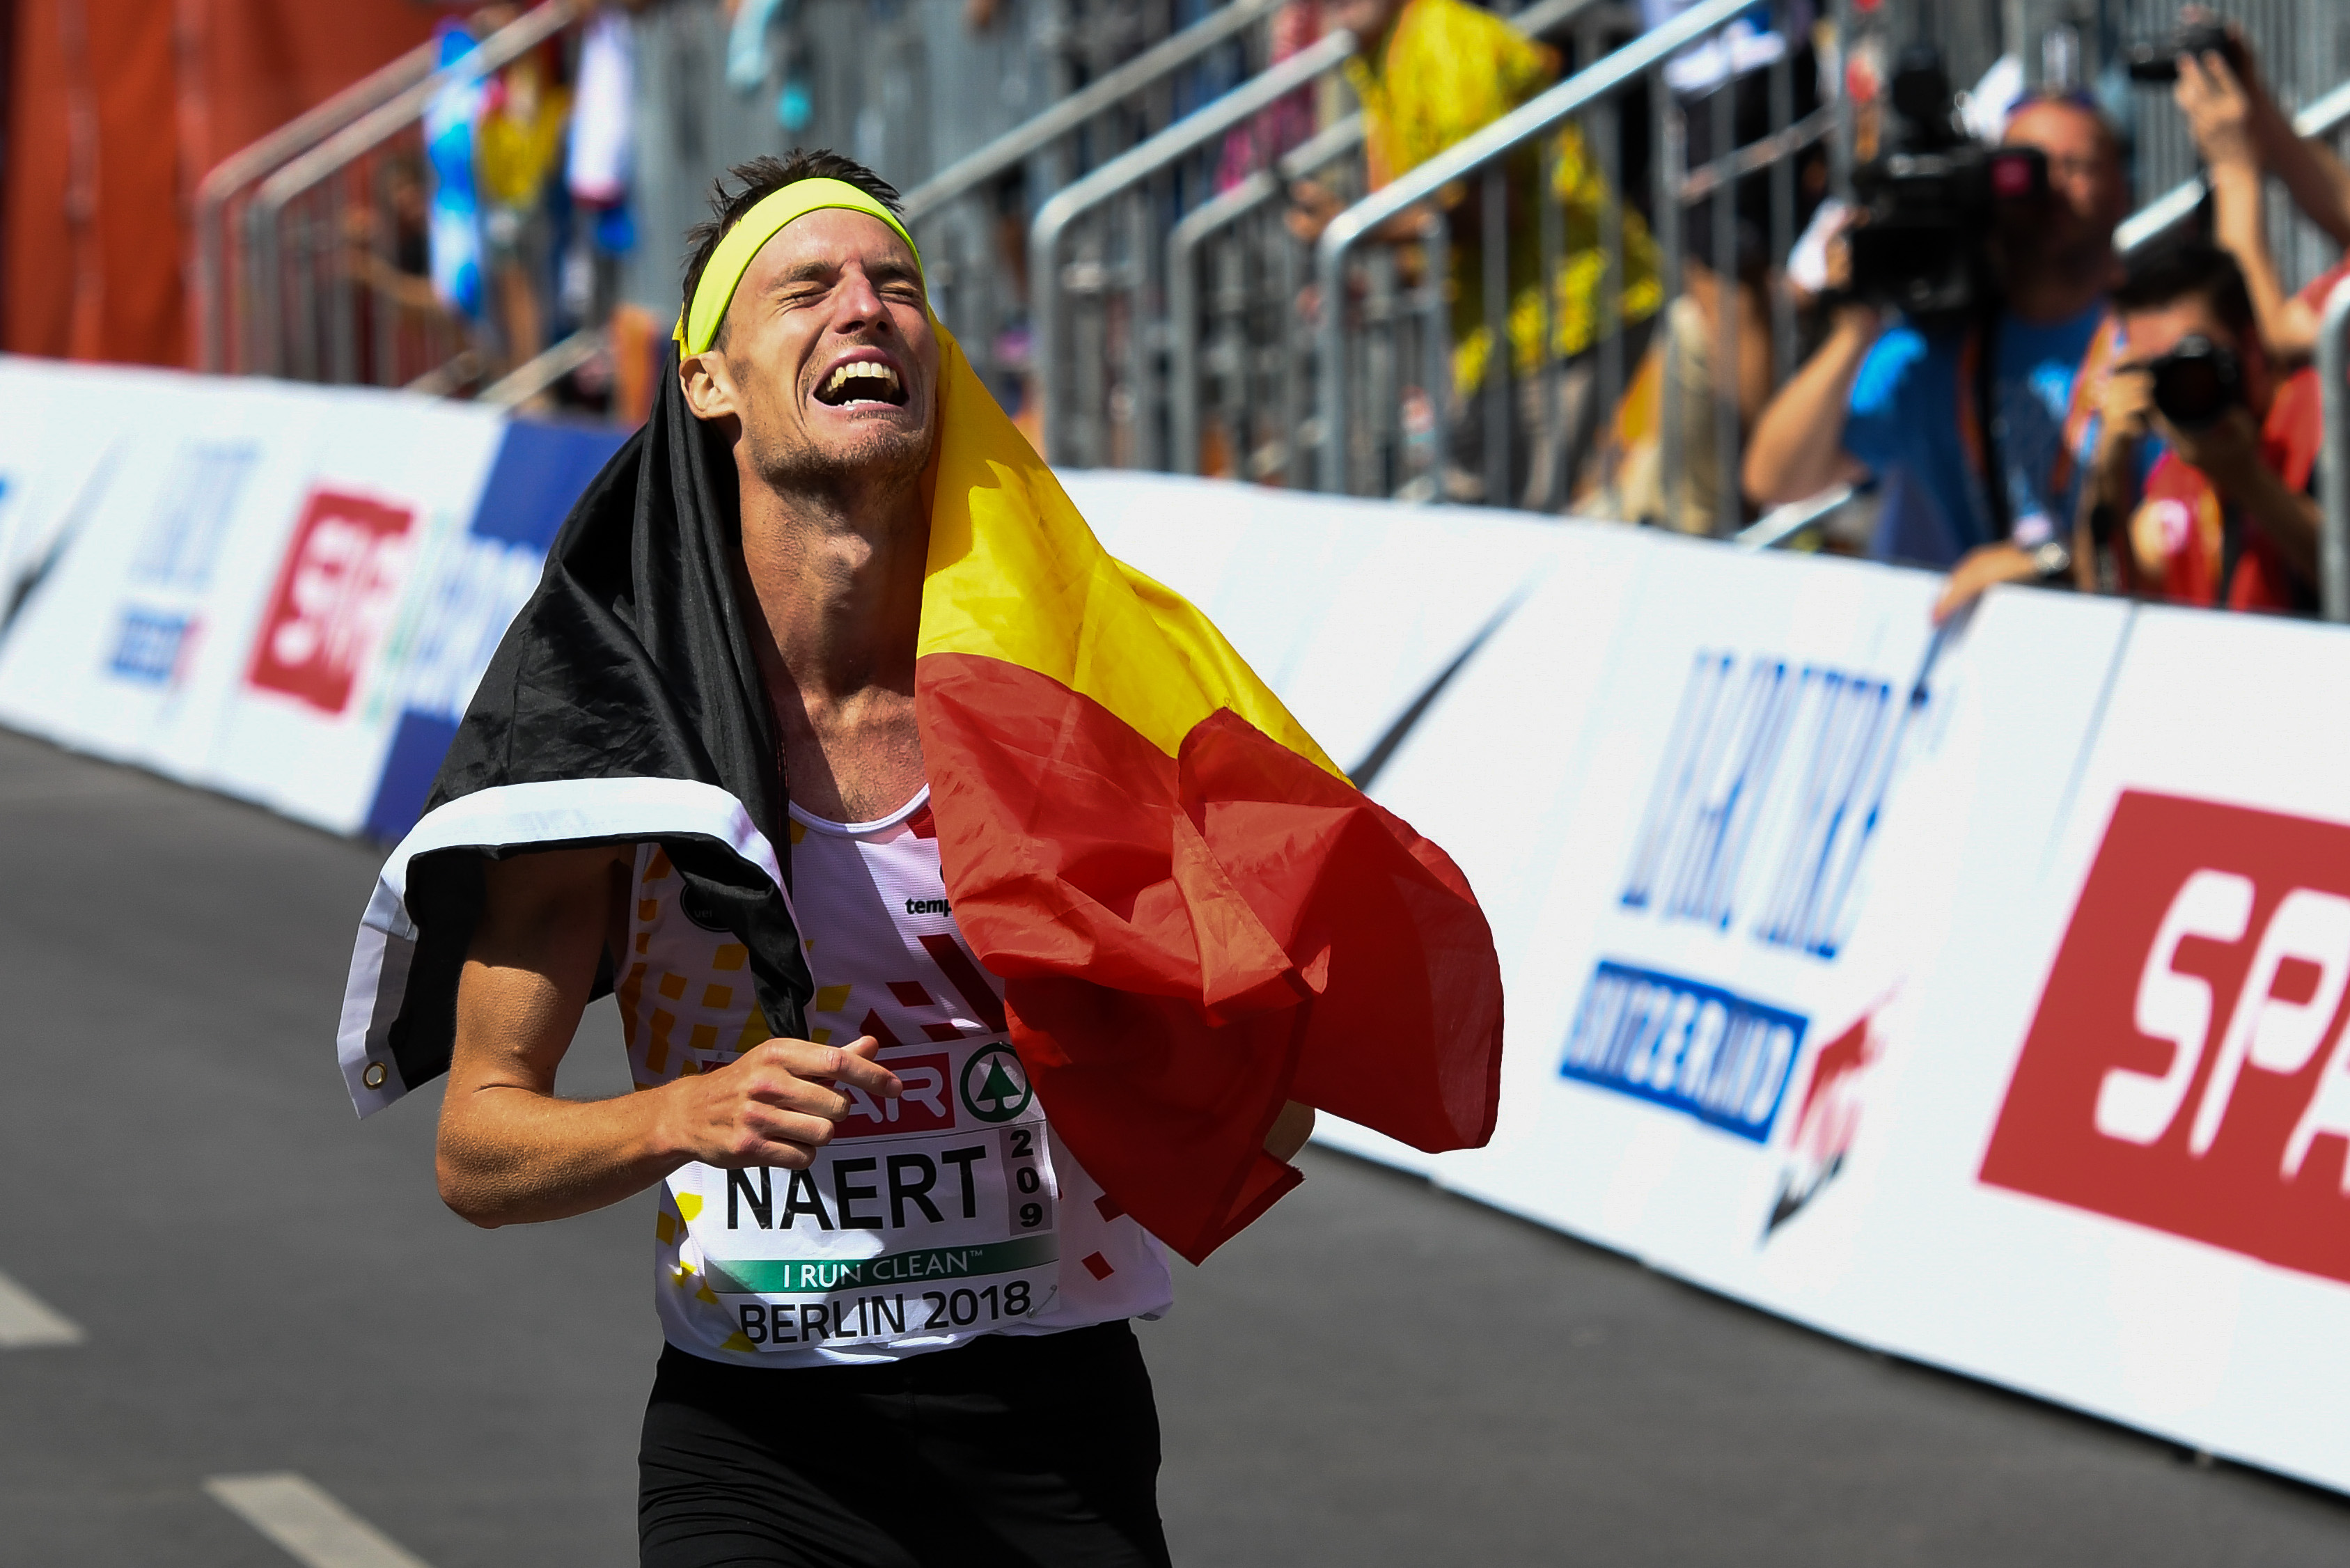 Koen Naert Marathon Berlijn 2018